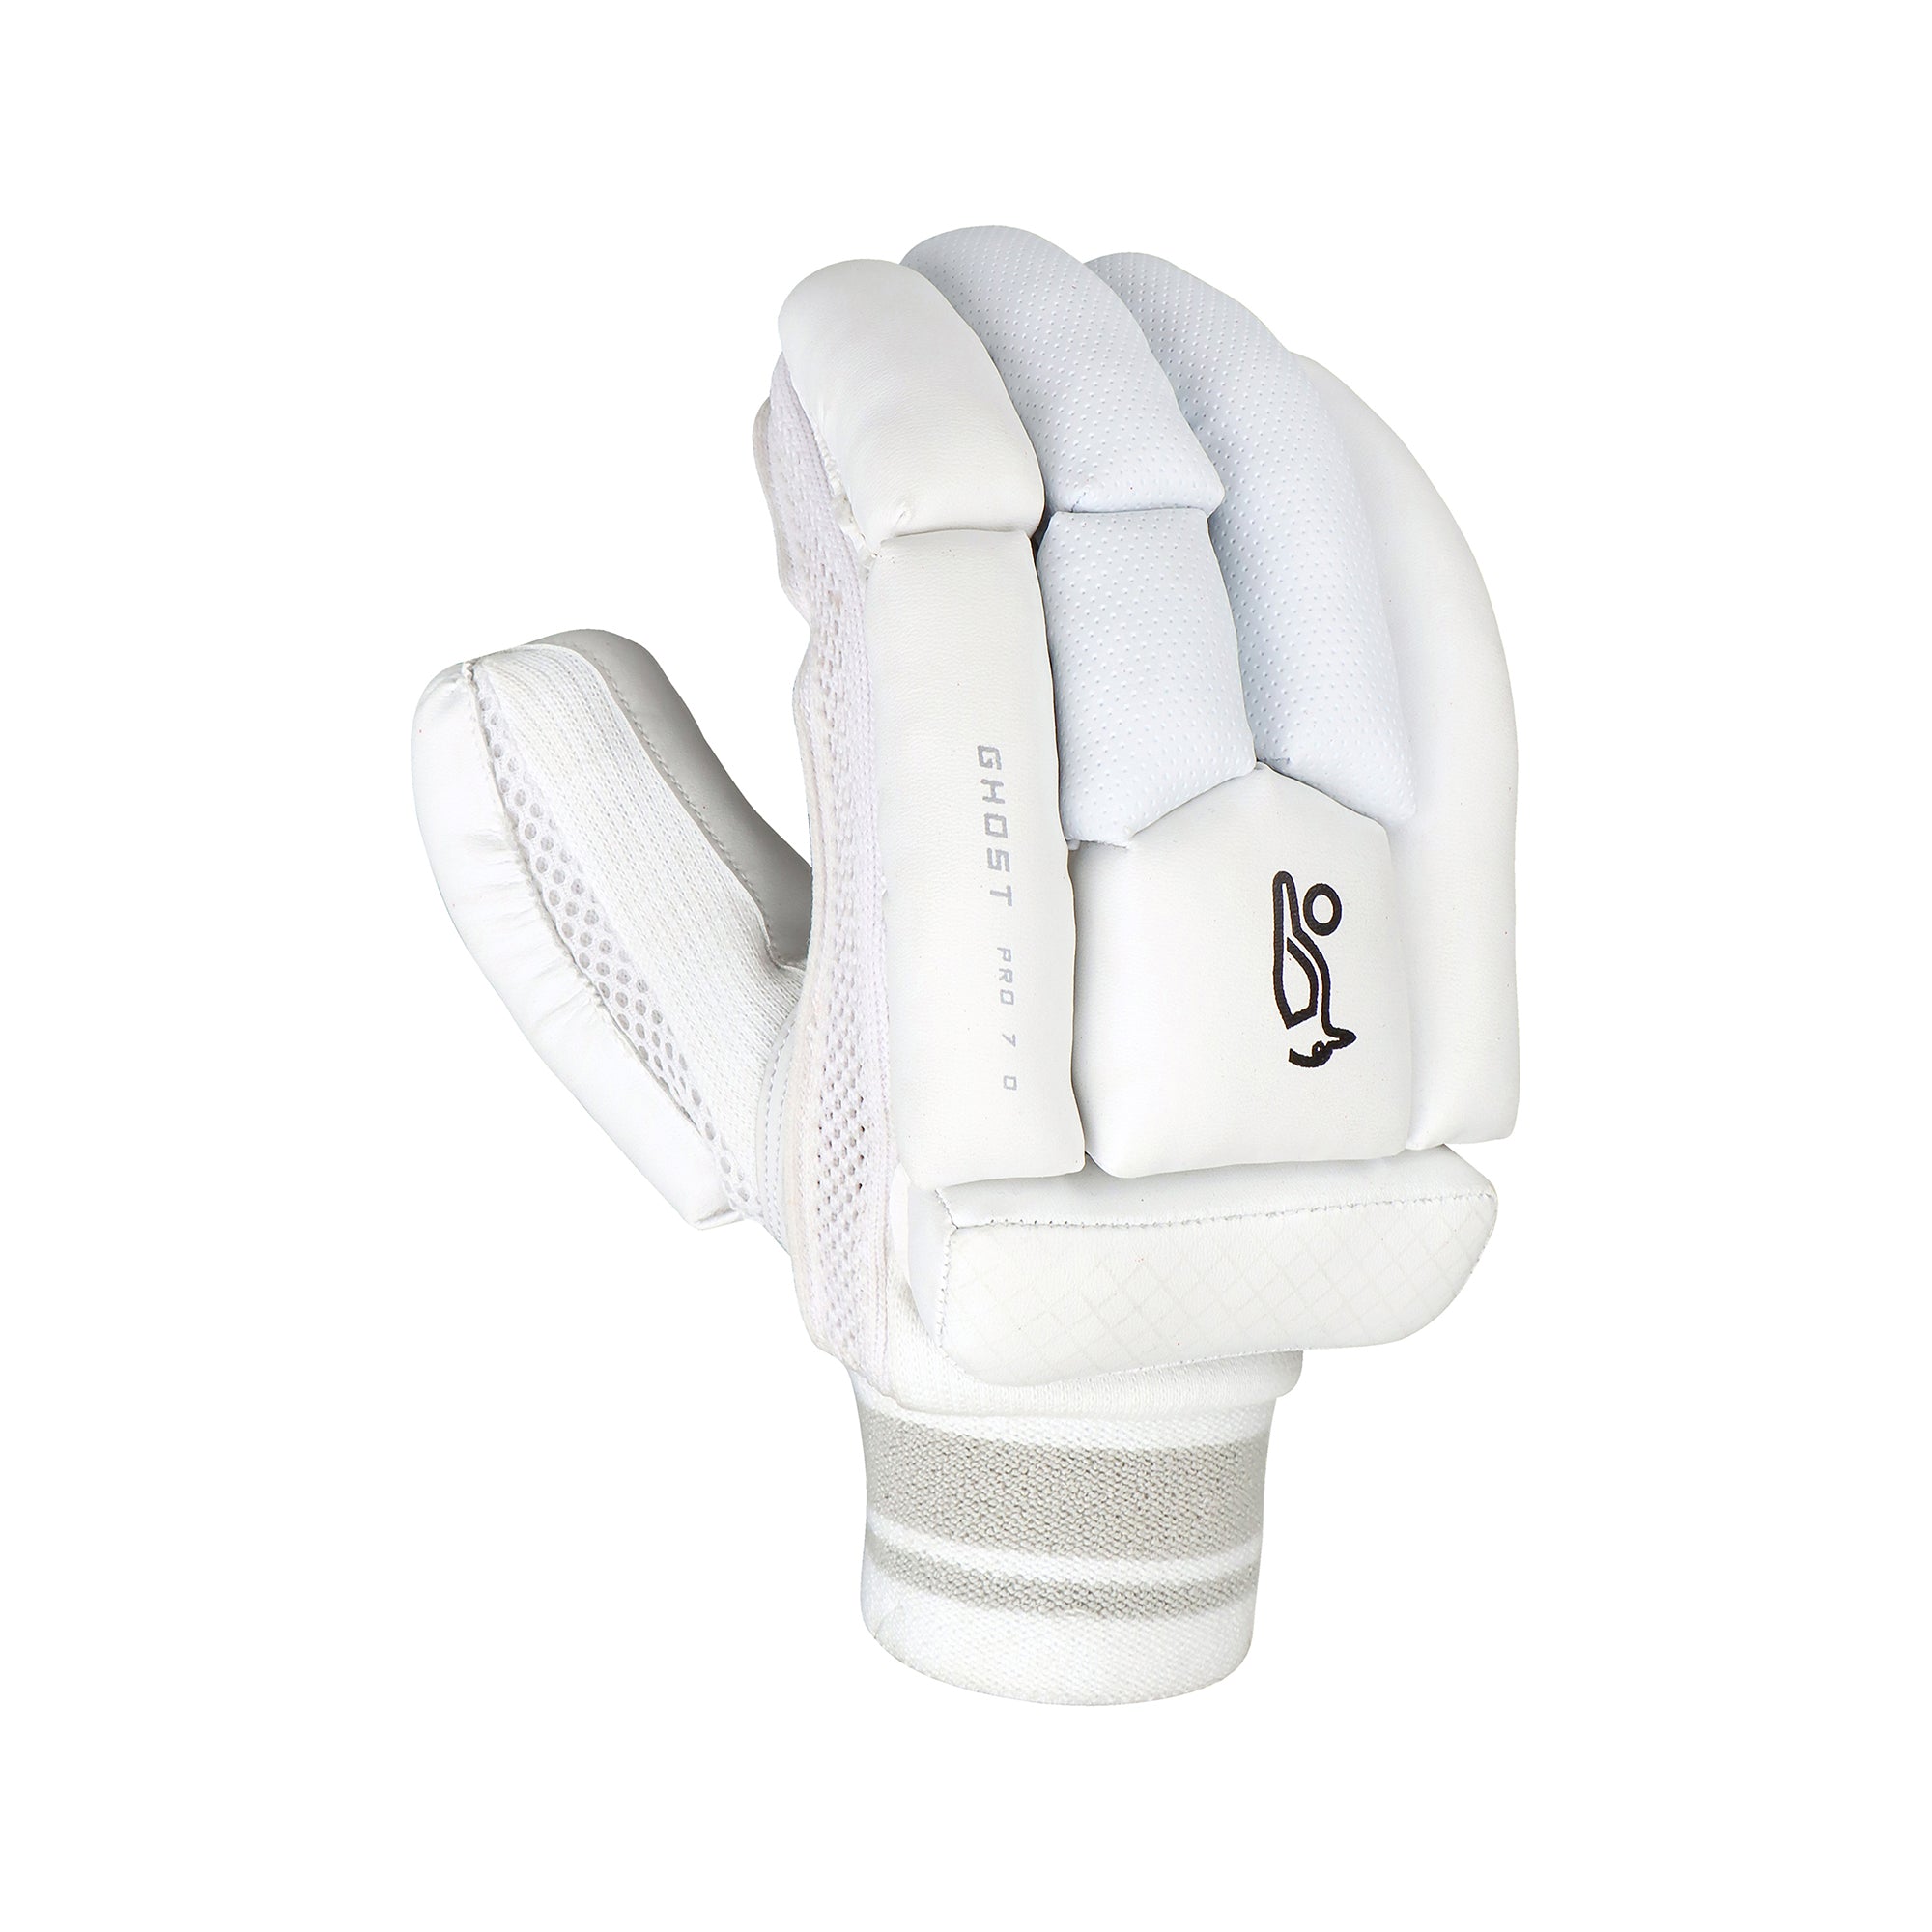 Kookaburra Ghost Pro 7.0 Batting Gloves